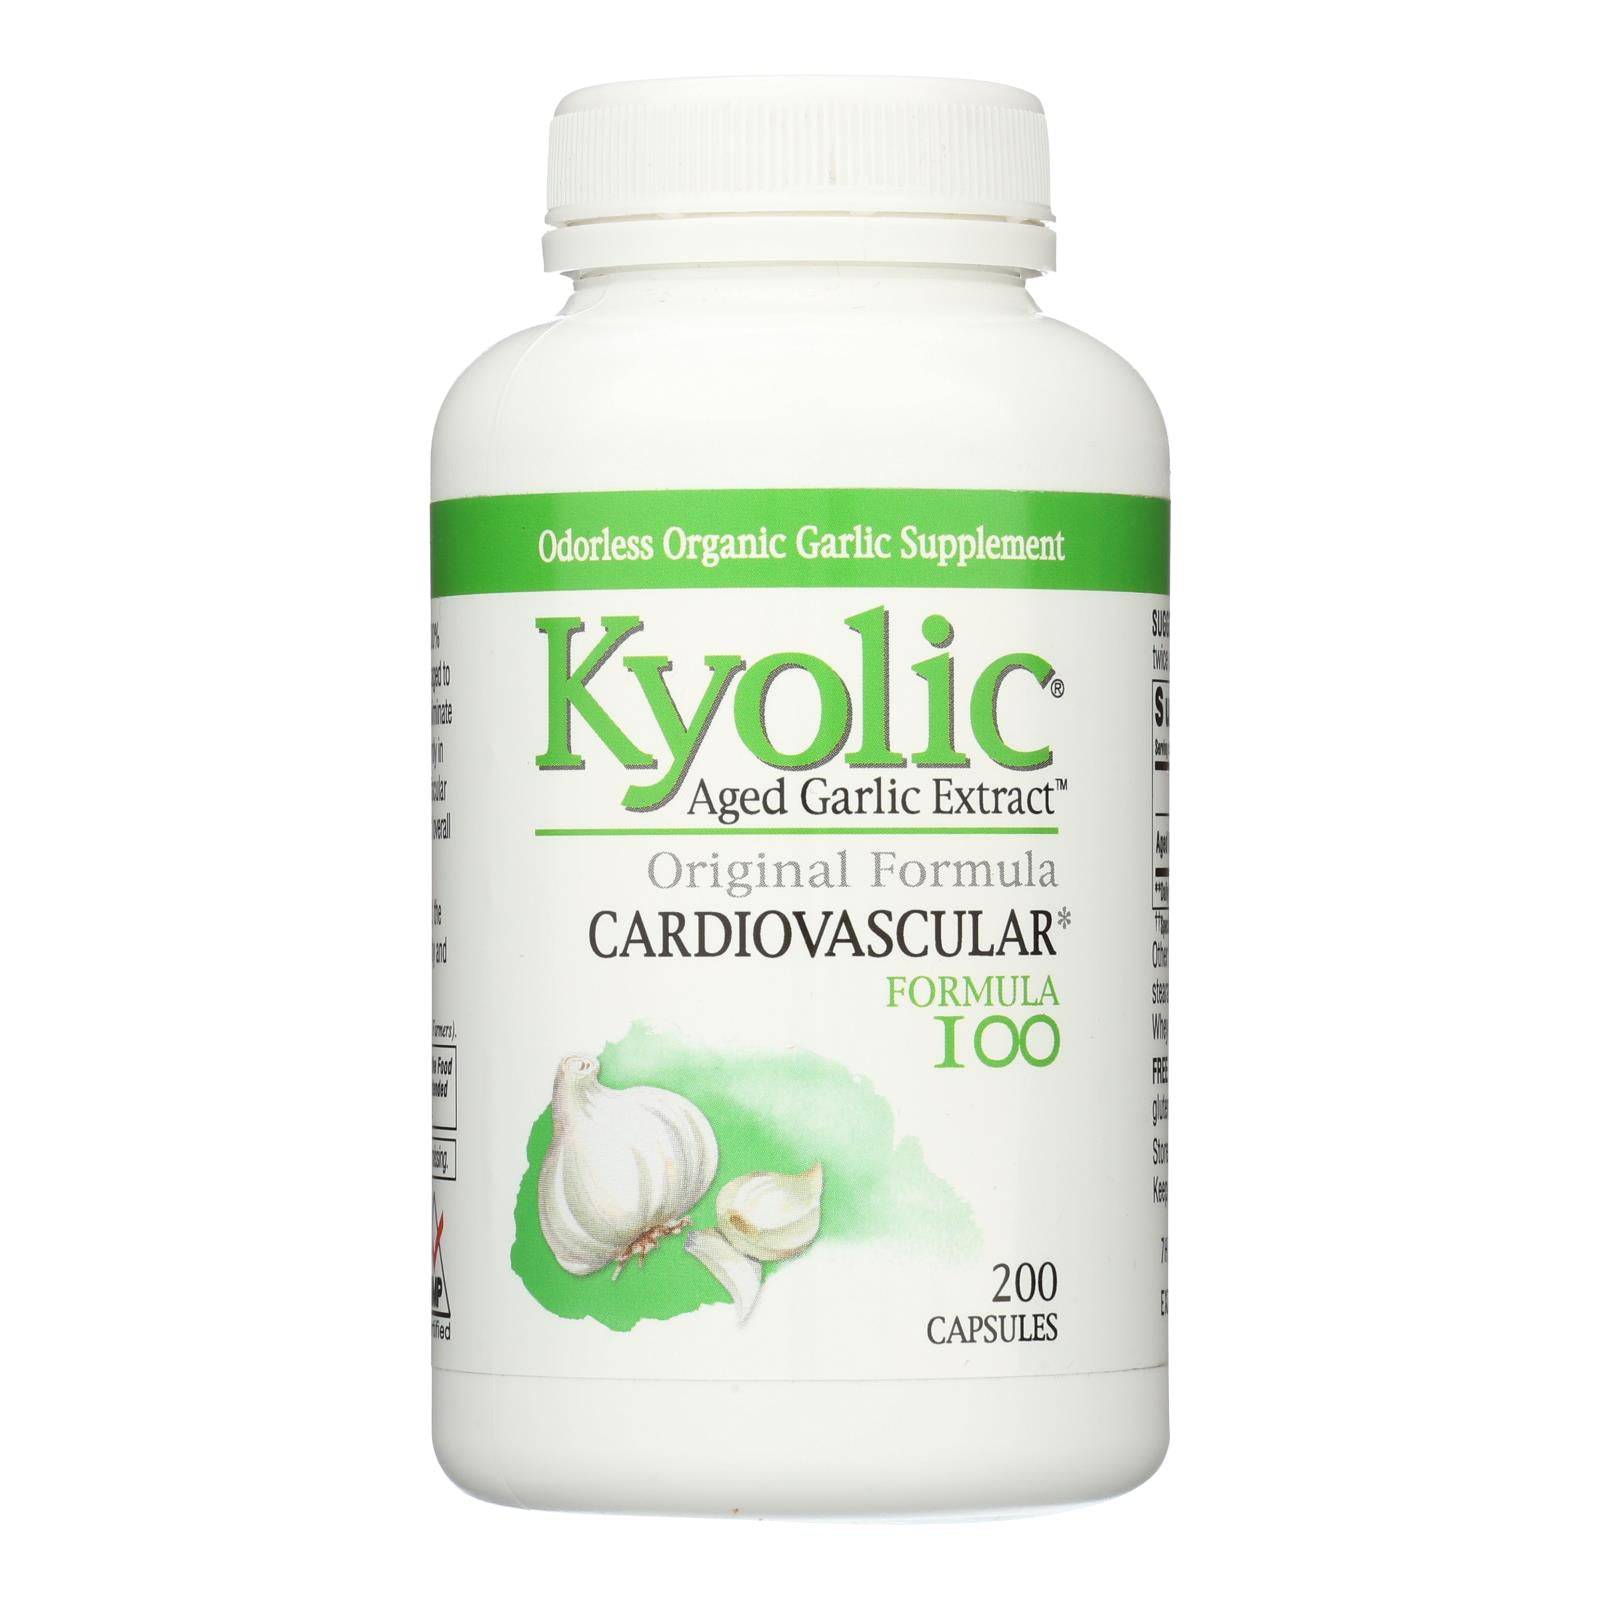 Buy Kyolic - Aged Garlic Extract Cardiovascular Formula 100 - 200 Capsules  at OnlyNaturals.us